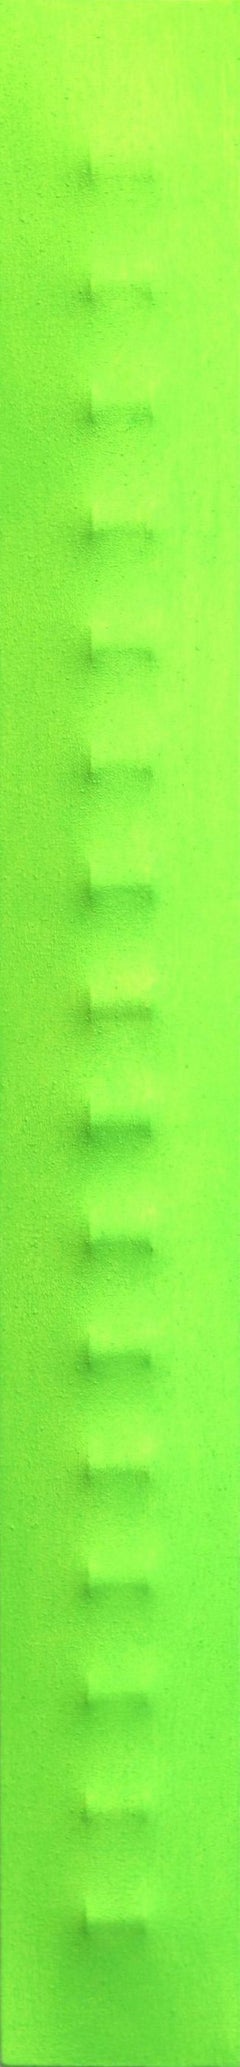 SBLGF - Three-dimensional Minimalist Green Abstract Painting